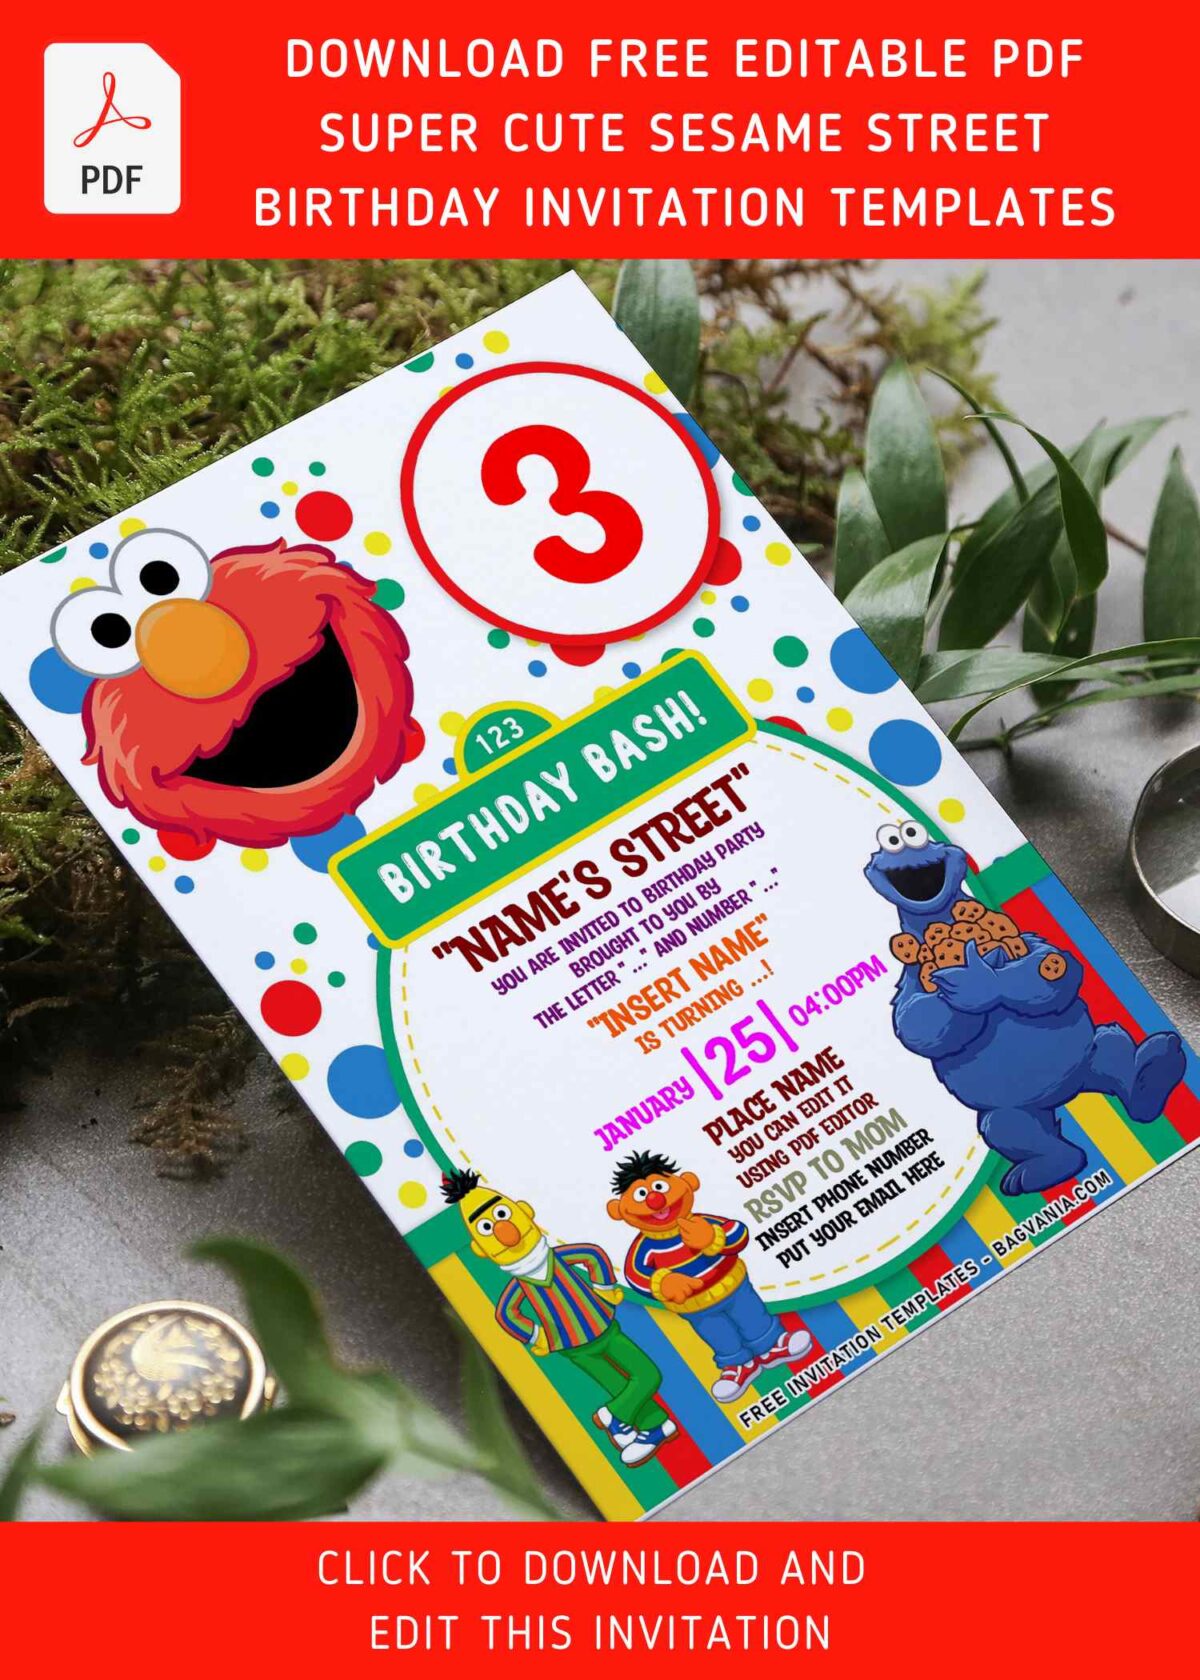 (Free Editable PDF) Super Cute Sesame Street Birthday Invitation Templates with cartoon Bert and Ernie